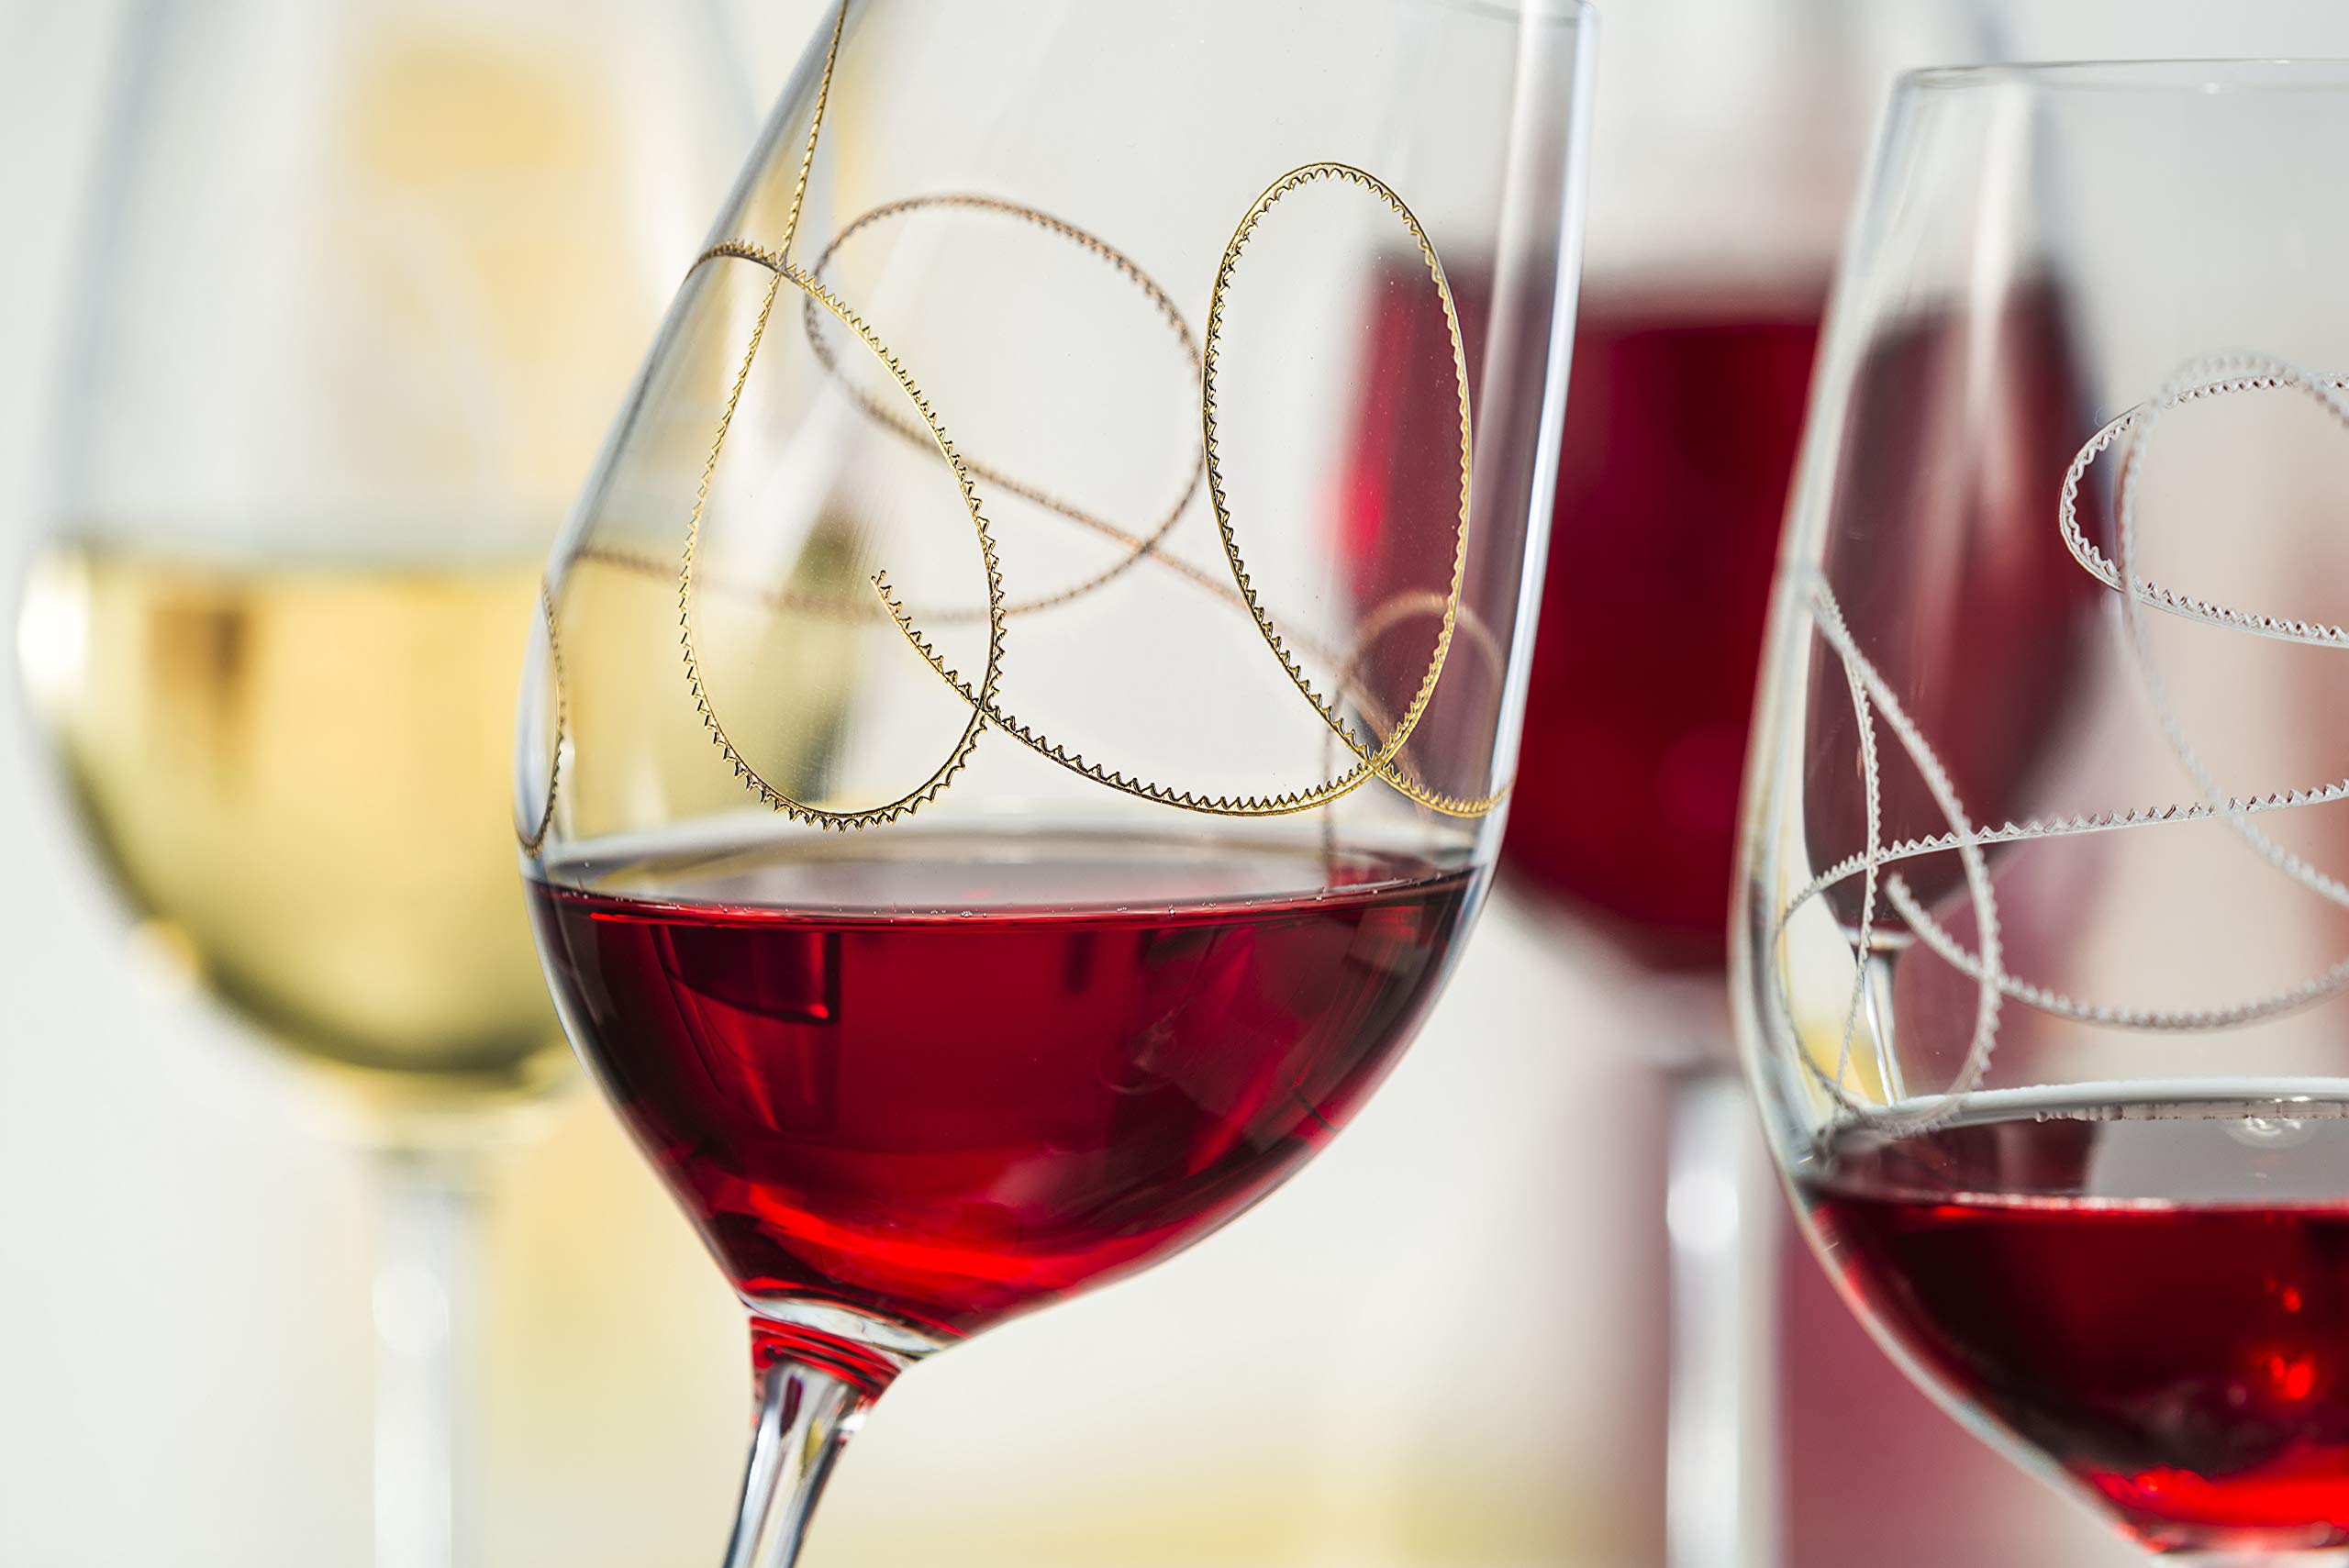 Barski Wine Glass, Goblet, Crystal Glass, Set of 4 Glasses, with String Design, Made in Europe, 14 oz.